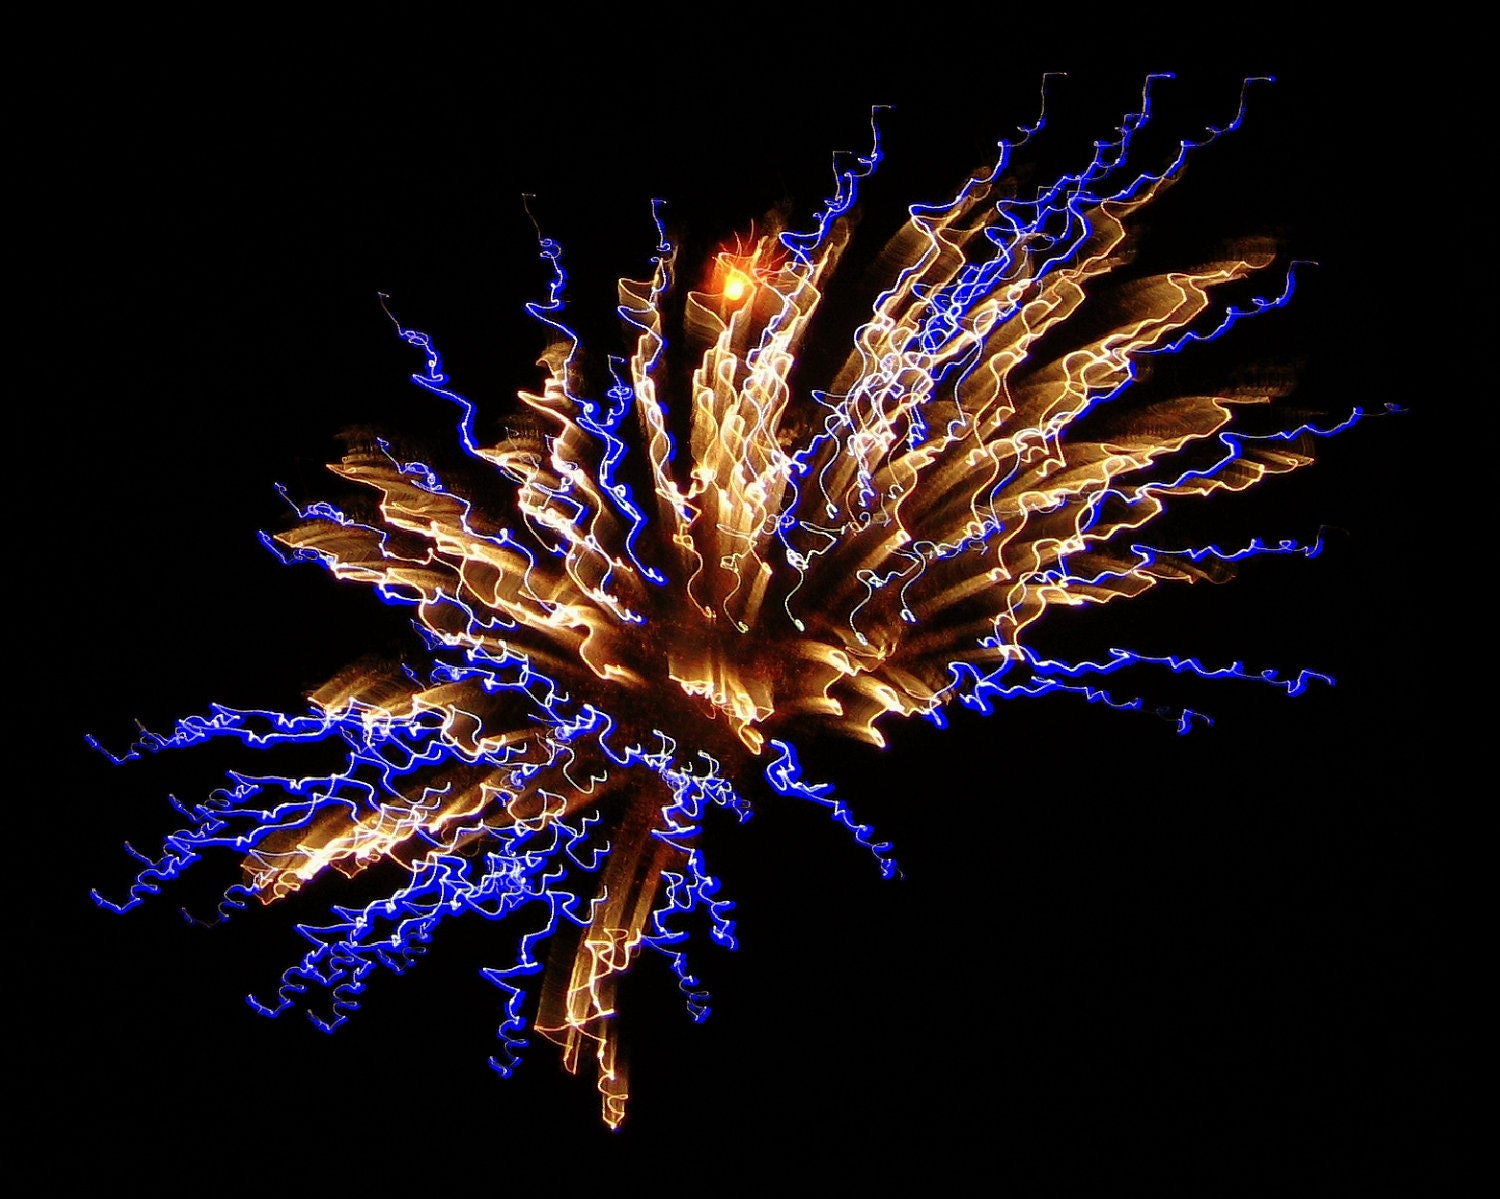 Spider -16"x20"  Digital Photograph of a Firework Display in Lemont, IL July 3, 2010 - AlsCoolStuff